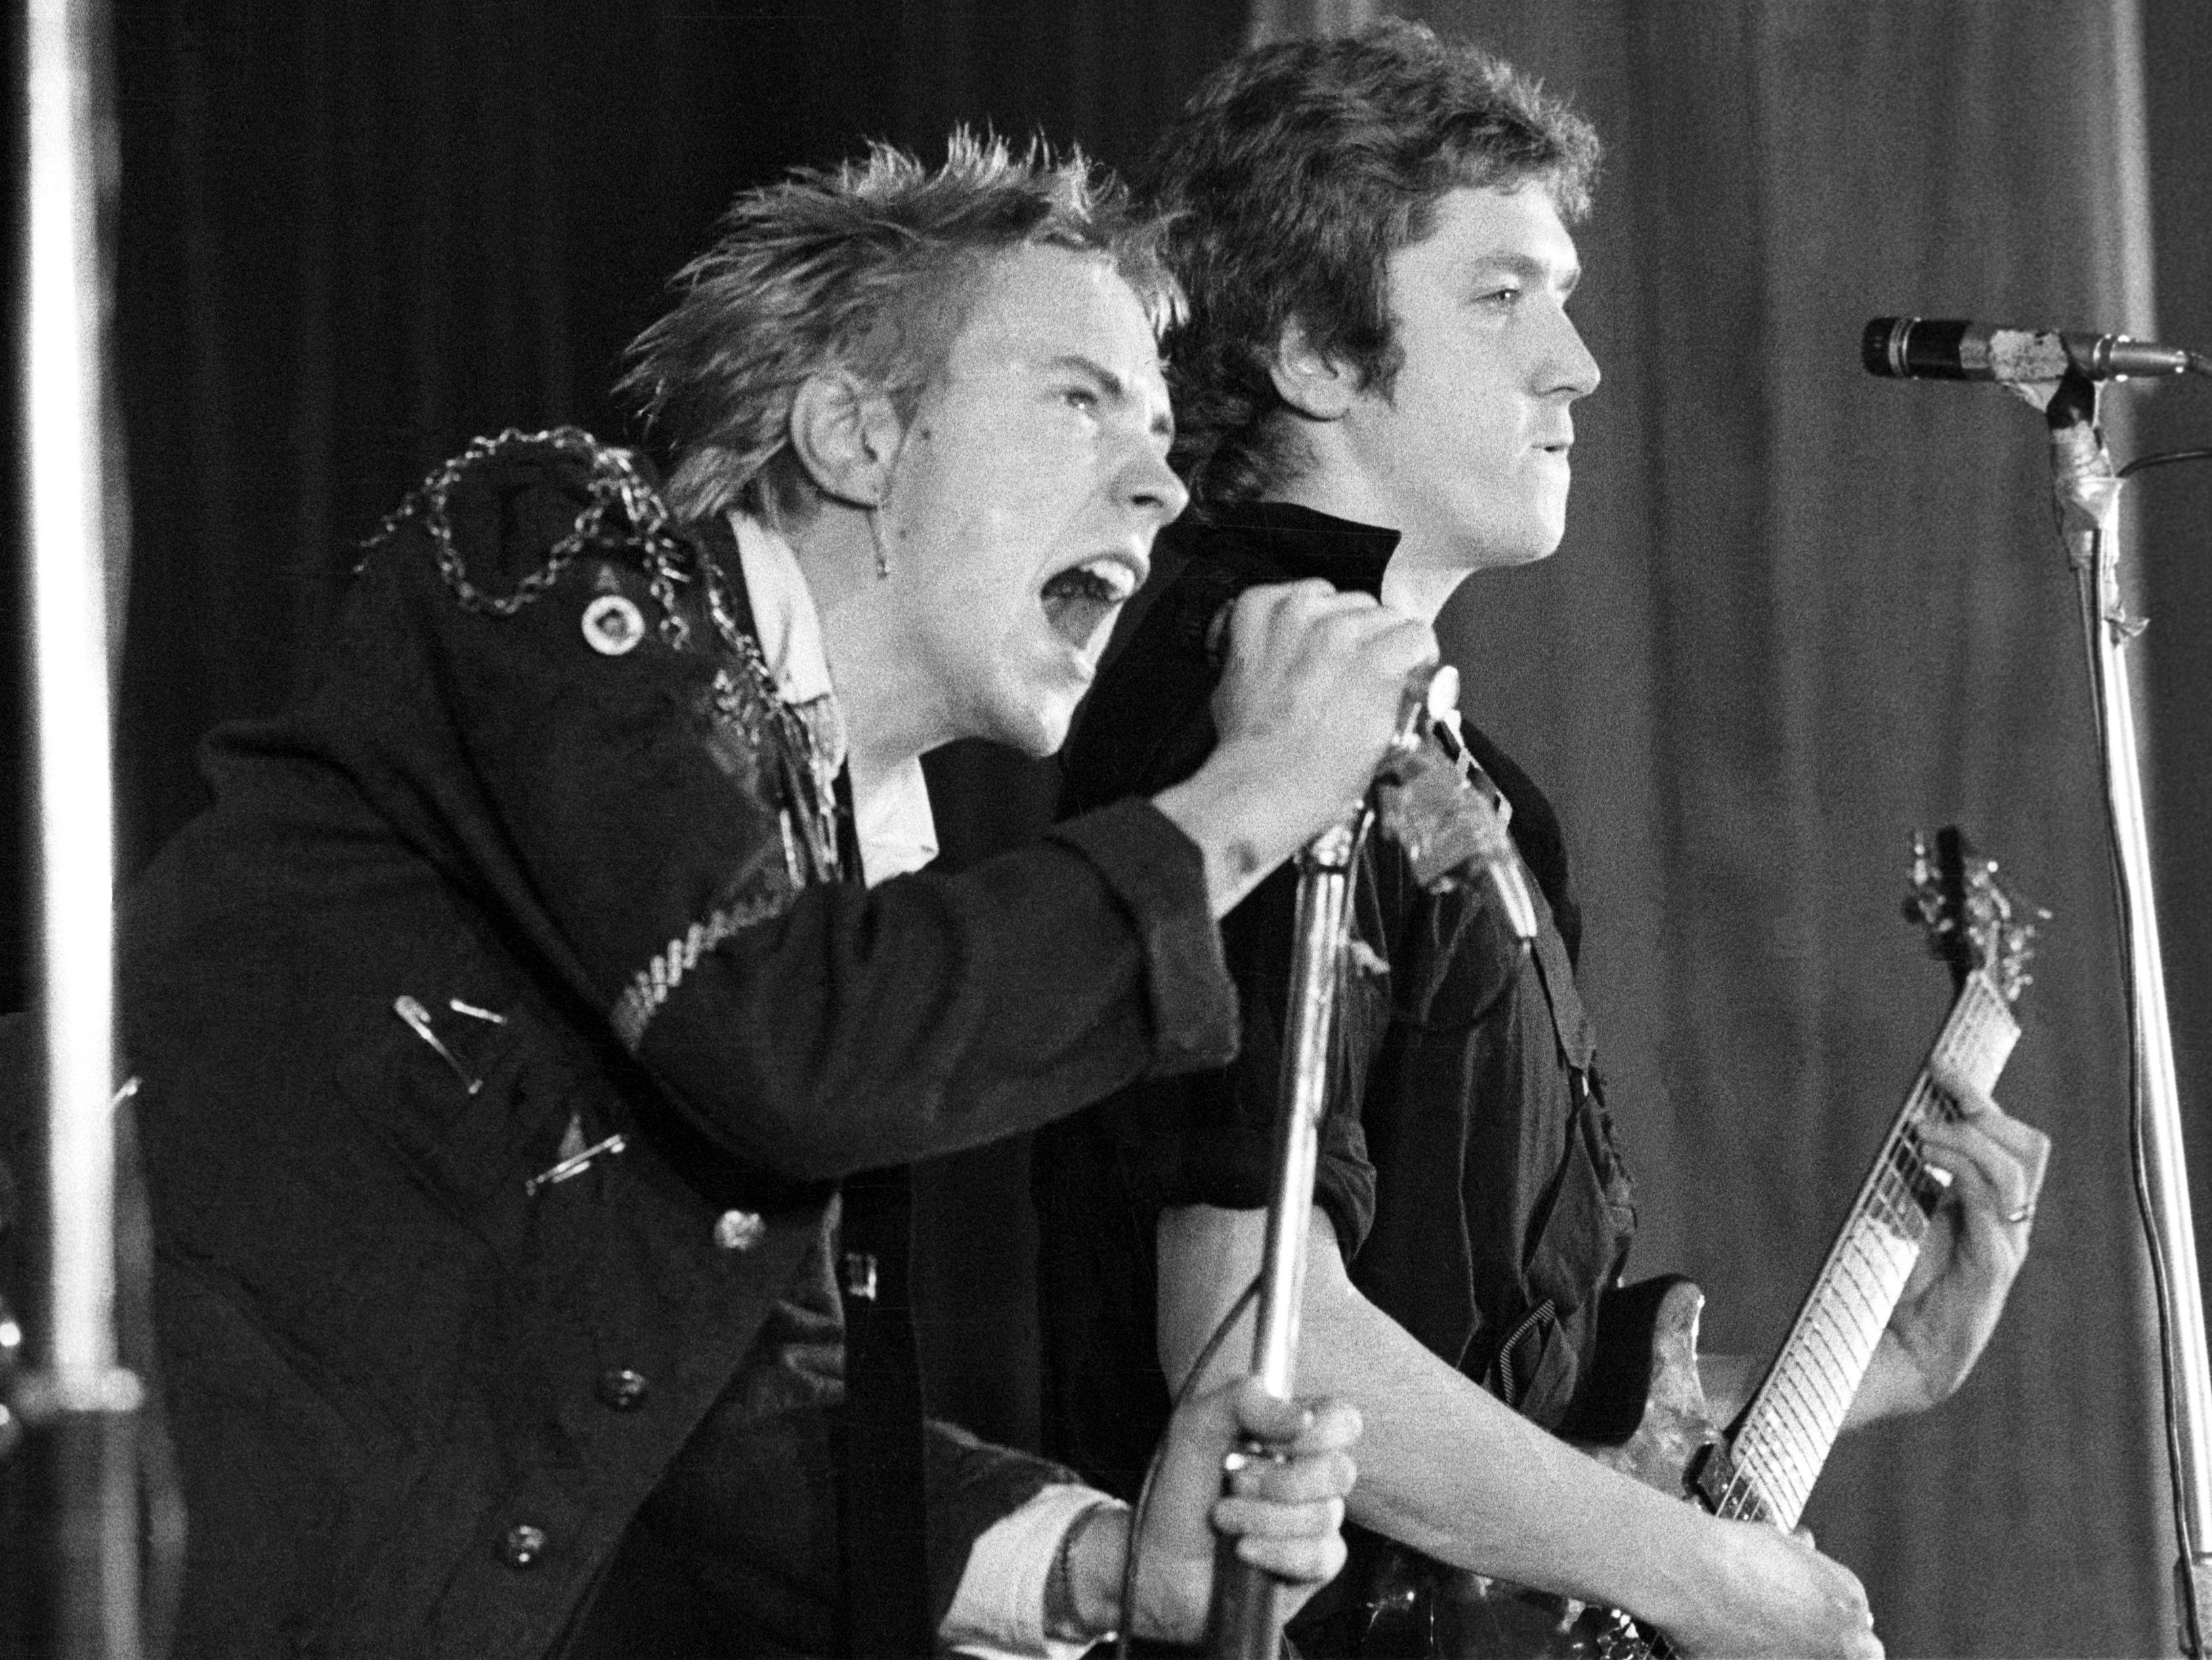 Johnny Rotten (John Lydon) and Steve Jones performing as the Sex Pistols in 1976